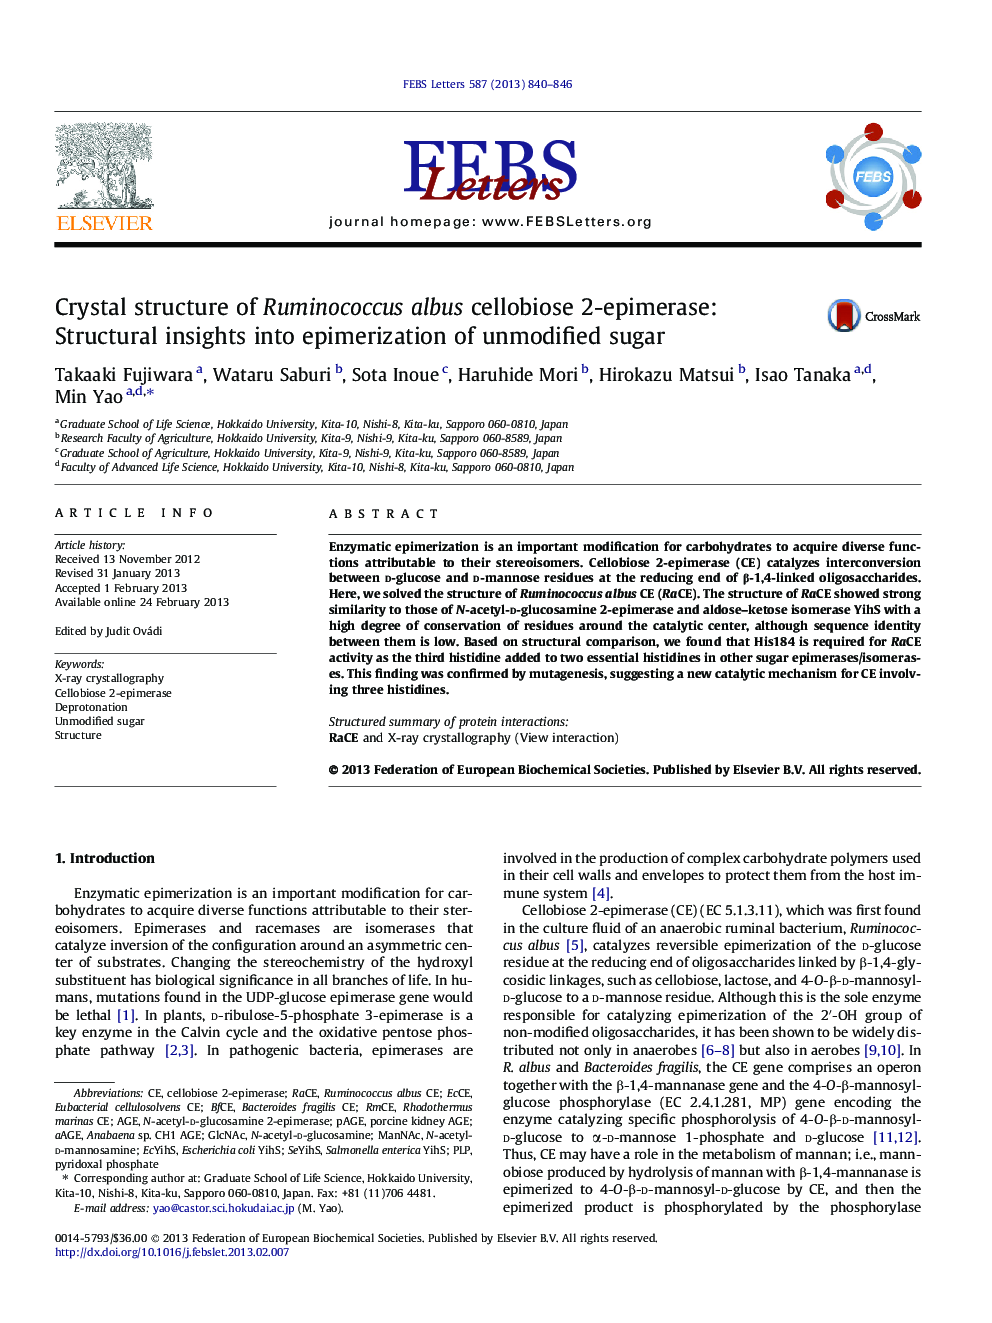 Crystal structure of Ruminococcus albus cellobiose 2-epimerase: Structural insights into epimerization of unmodified sugar